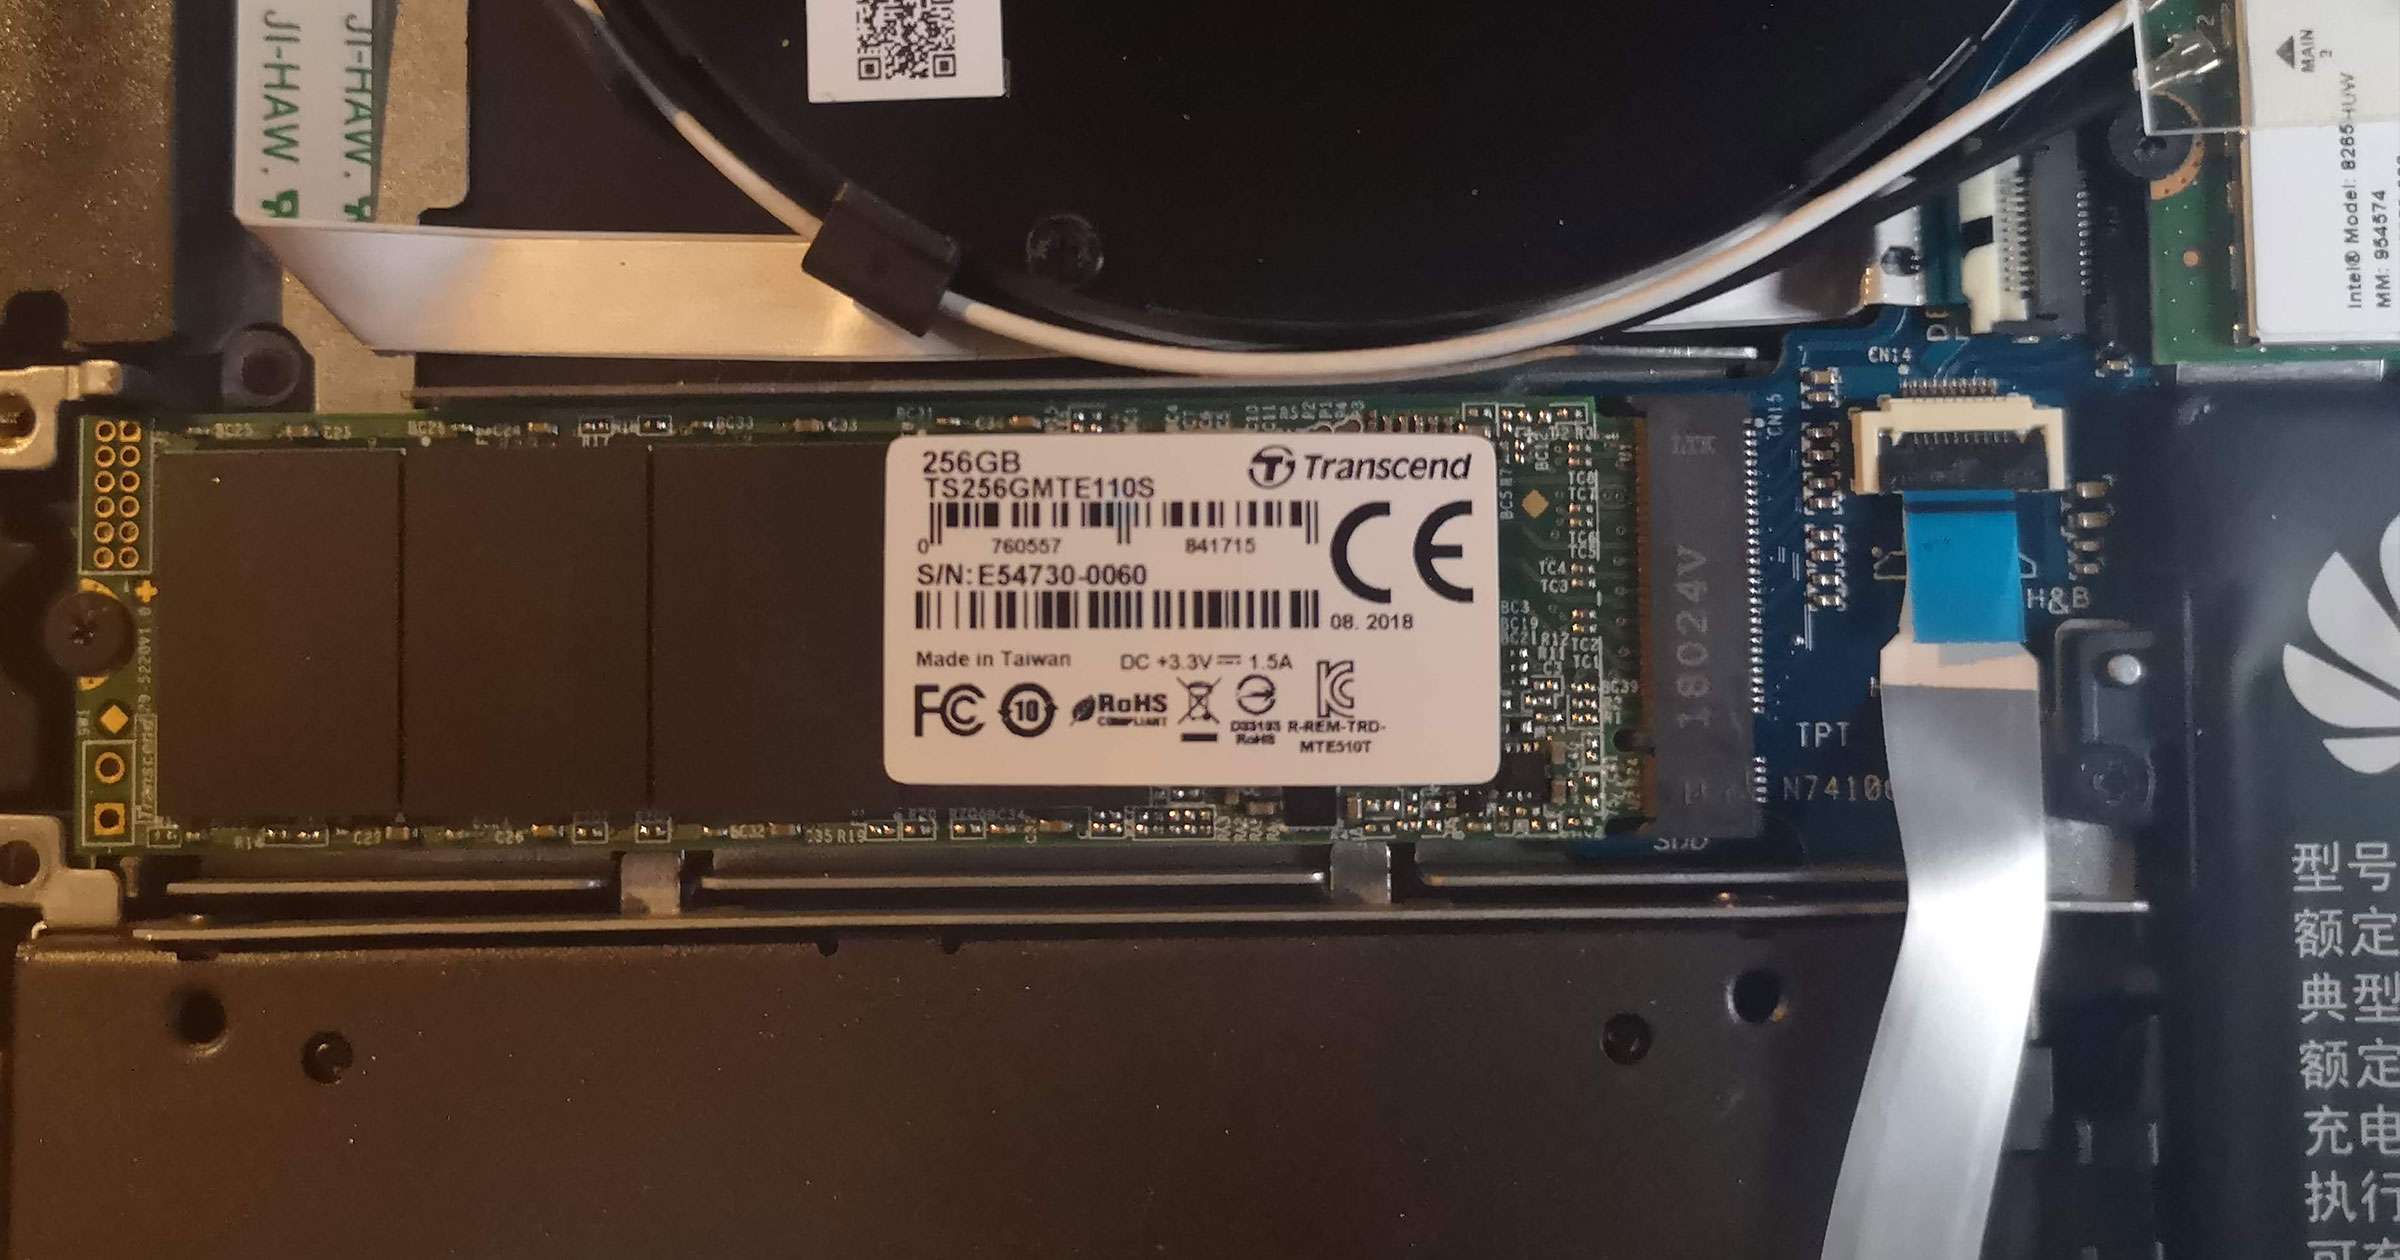 [PL] A Recenzja dysku Transcend PCIe SSD 110S